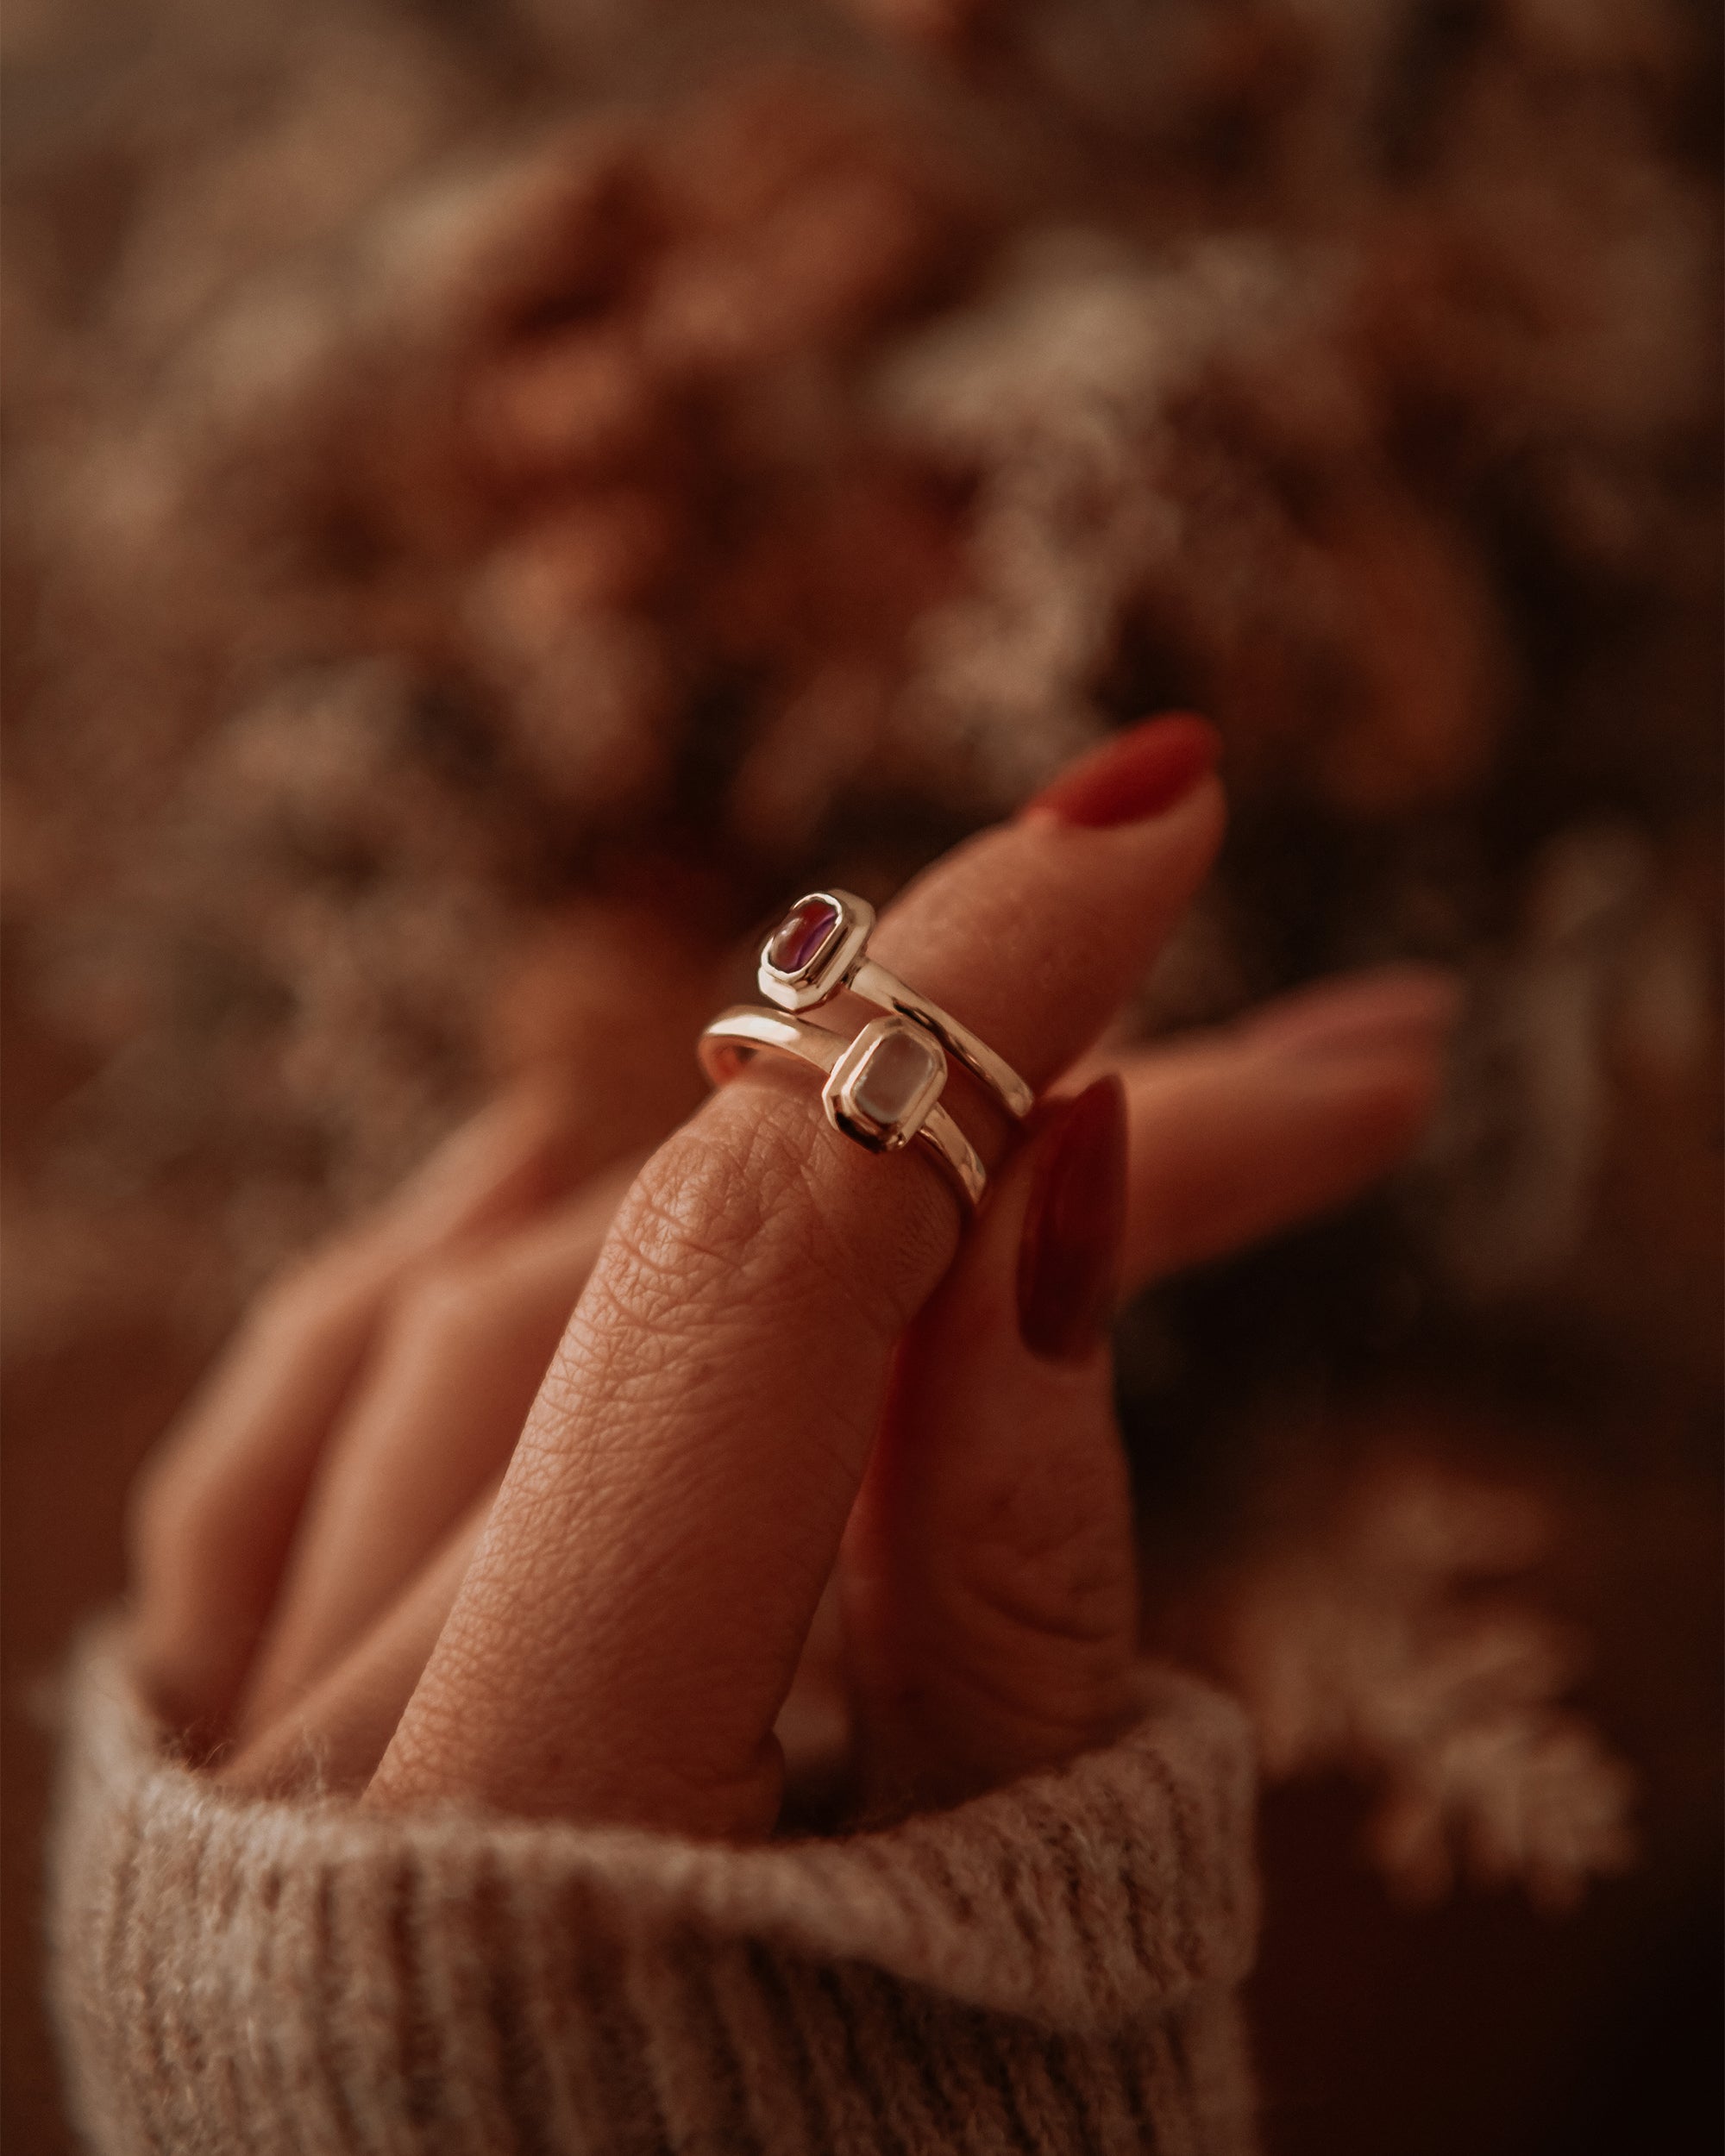 Frances Gold Vermeil Birthstone Ring - February